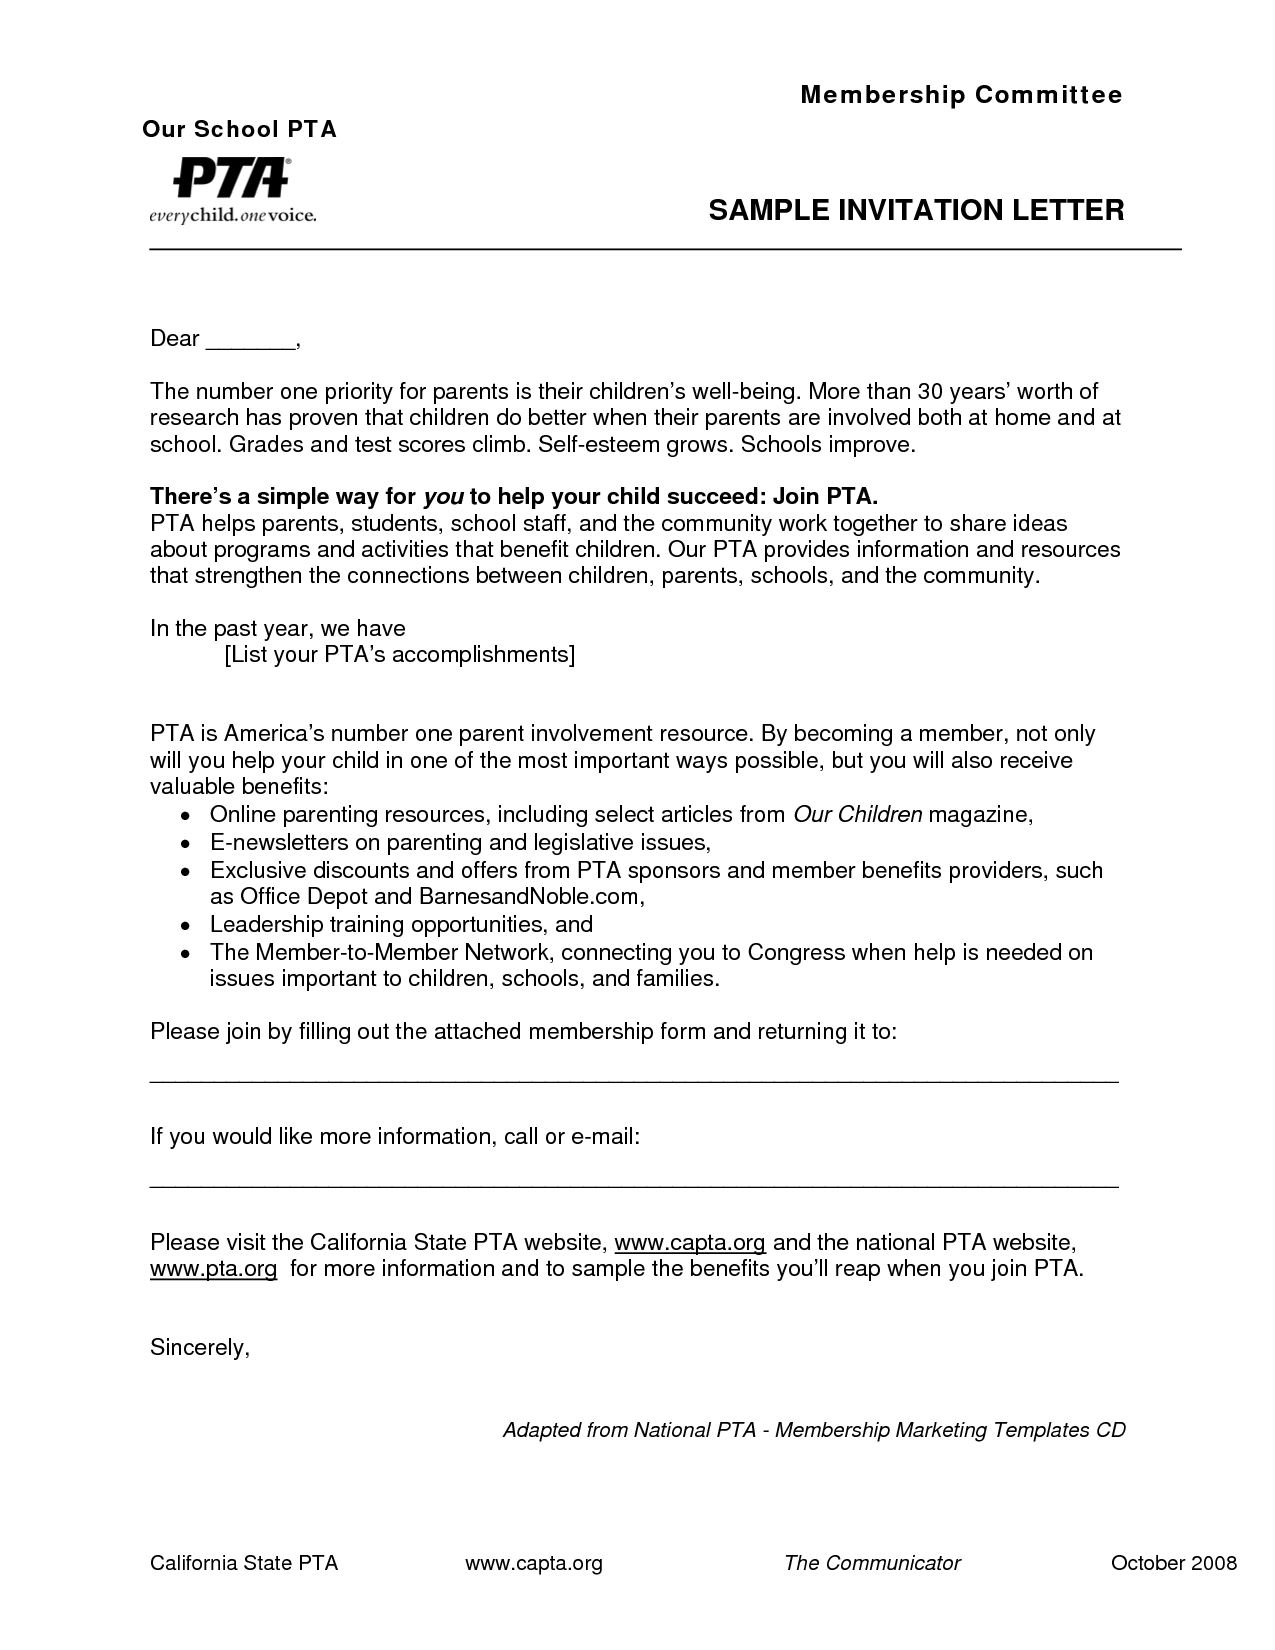 81 Report Official Invitation Letter Samples Maker for Official Invitation Letter Samples